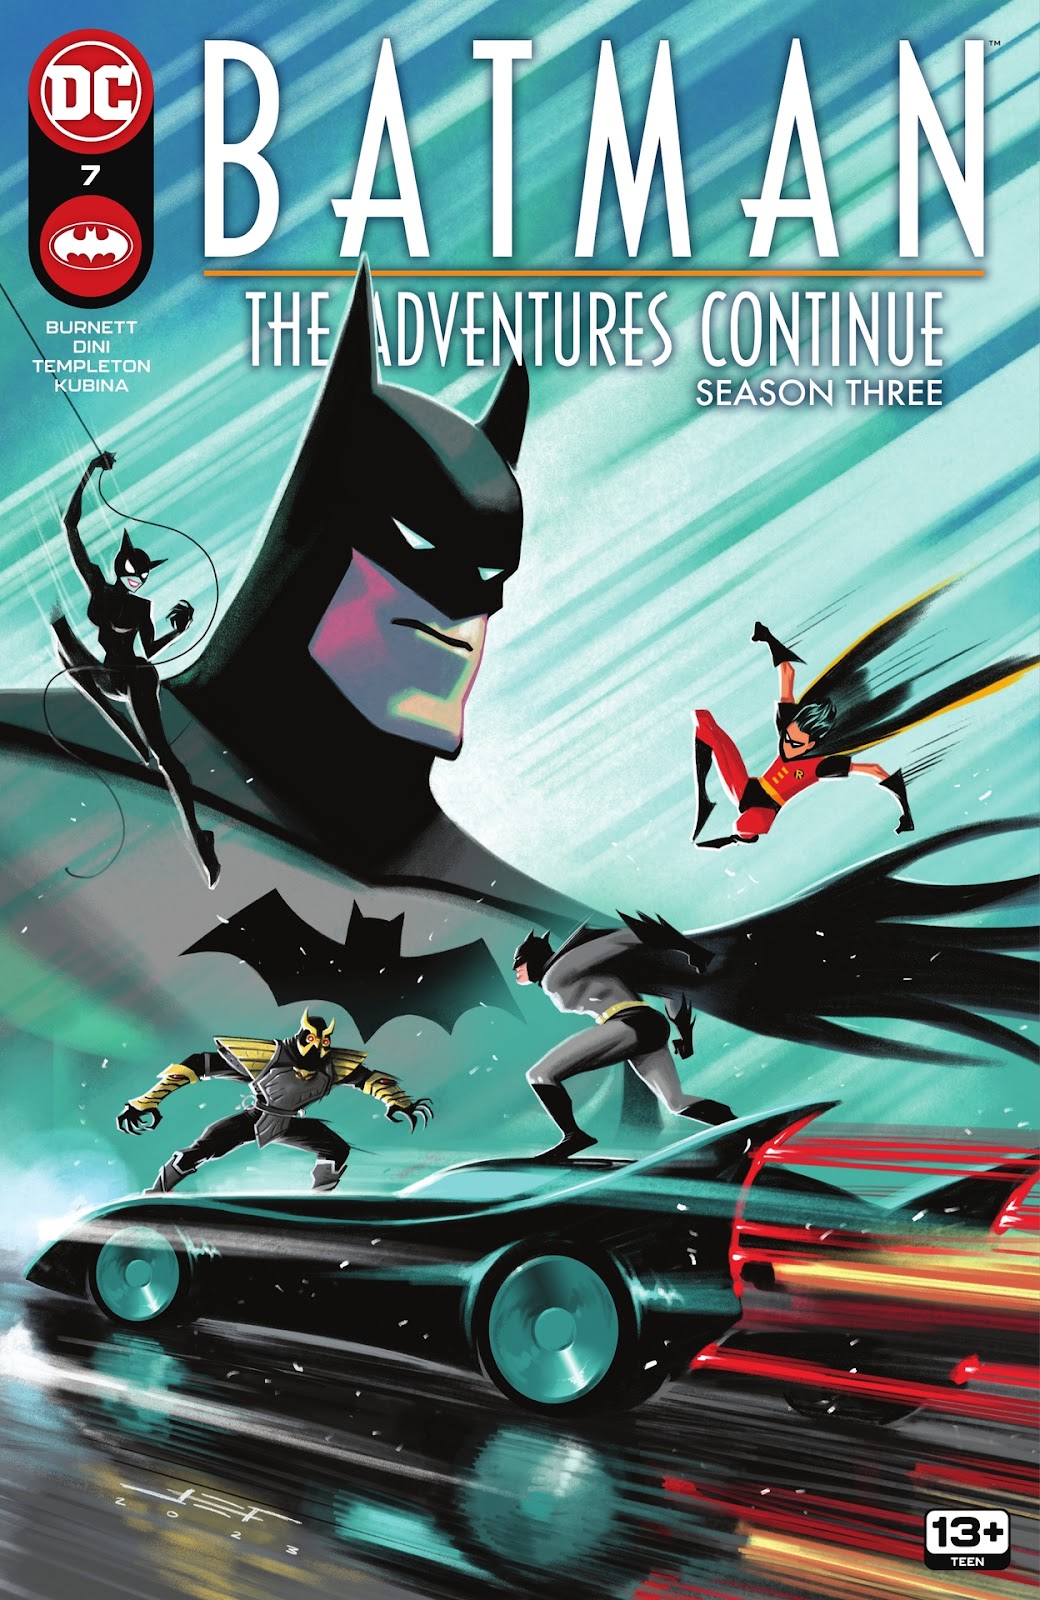 Batman: The Adventures Continue Season Three issue 7 - Page 1